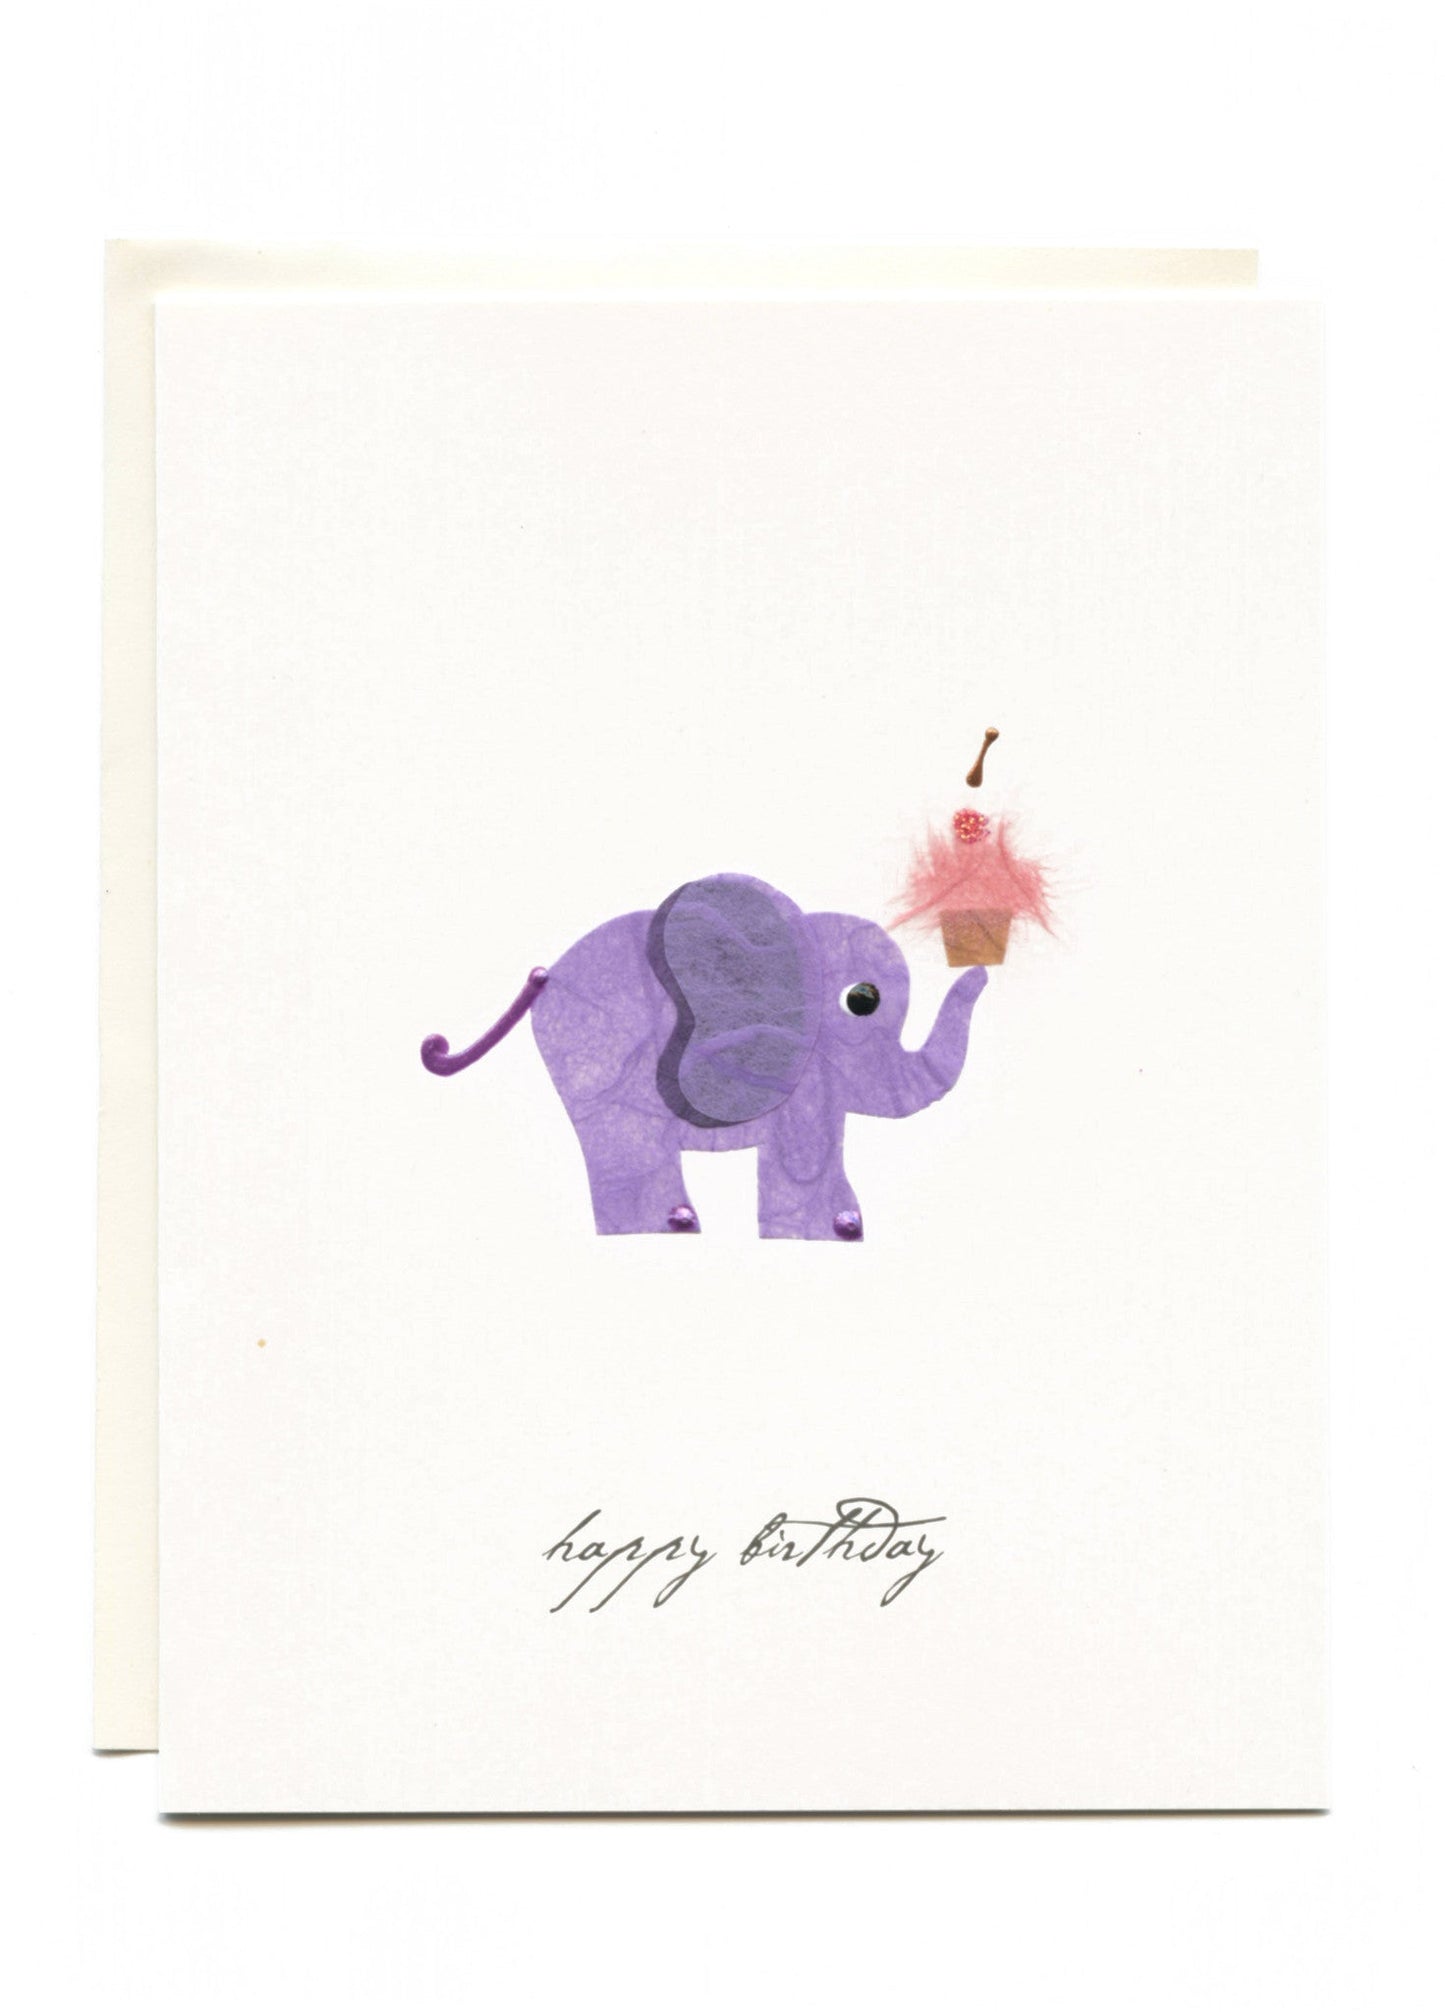 "Happy Birthday" Elephant with Cupcake Greeting Card